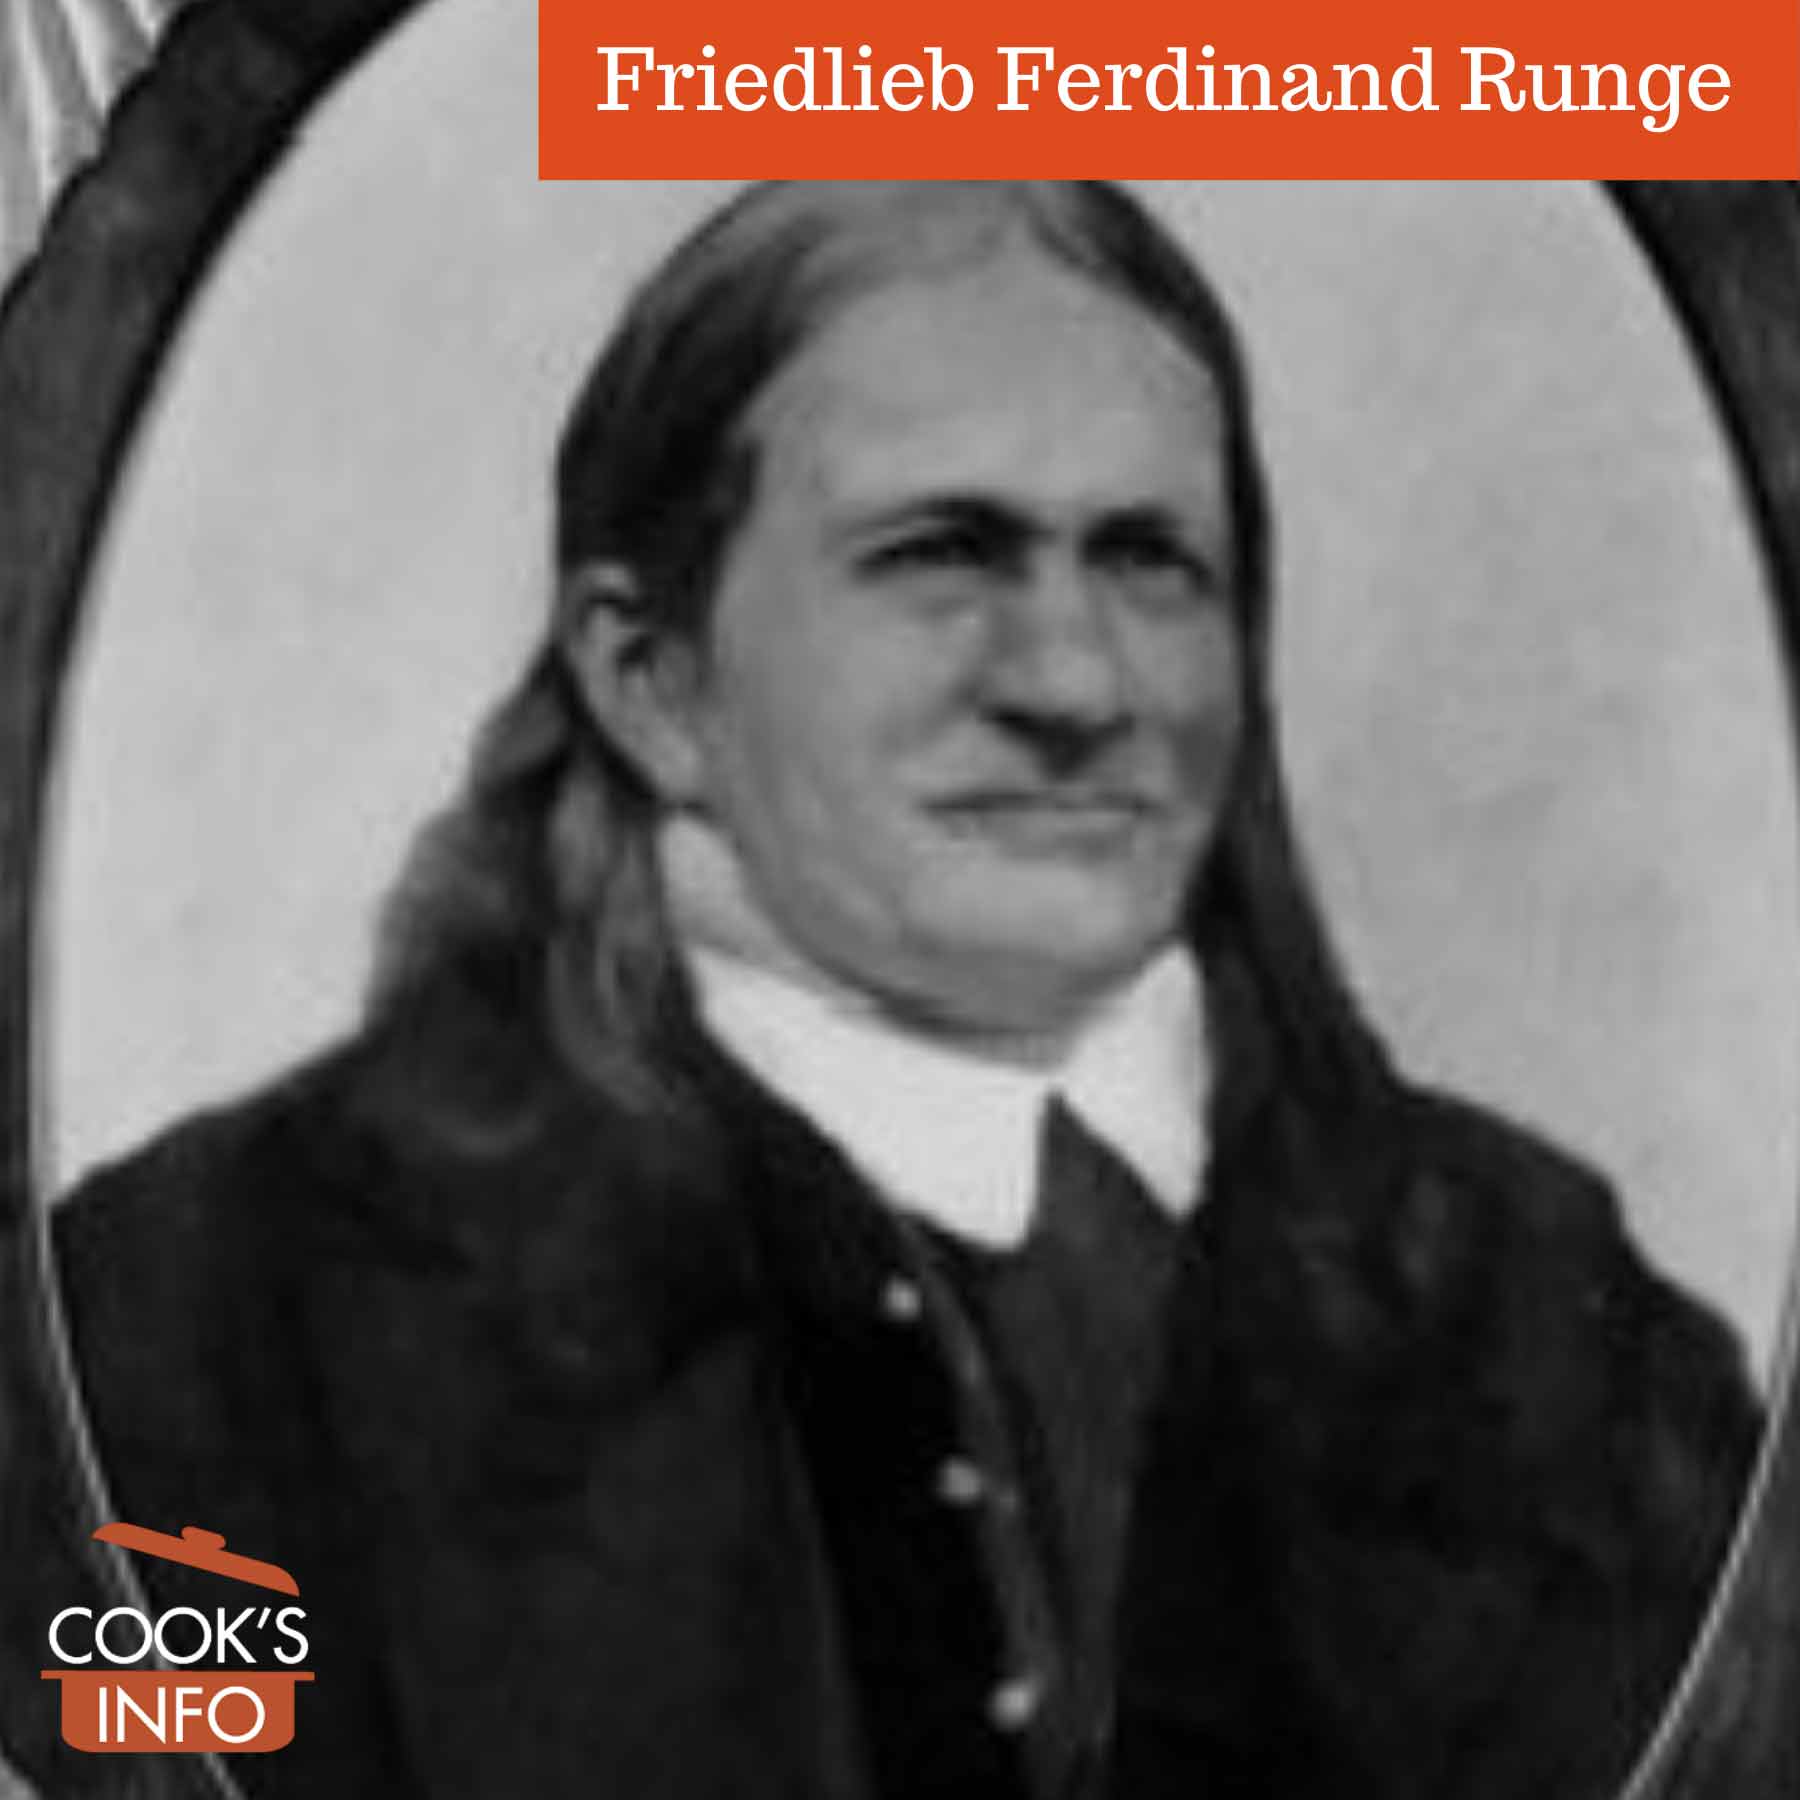 Friedlieb Ferdinand Runge